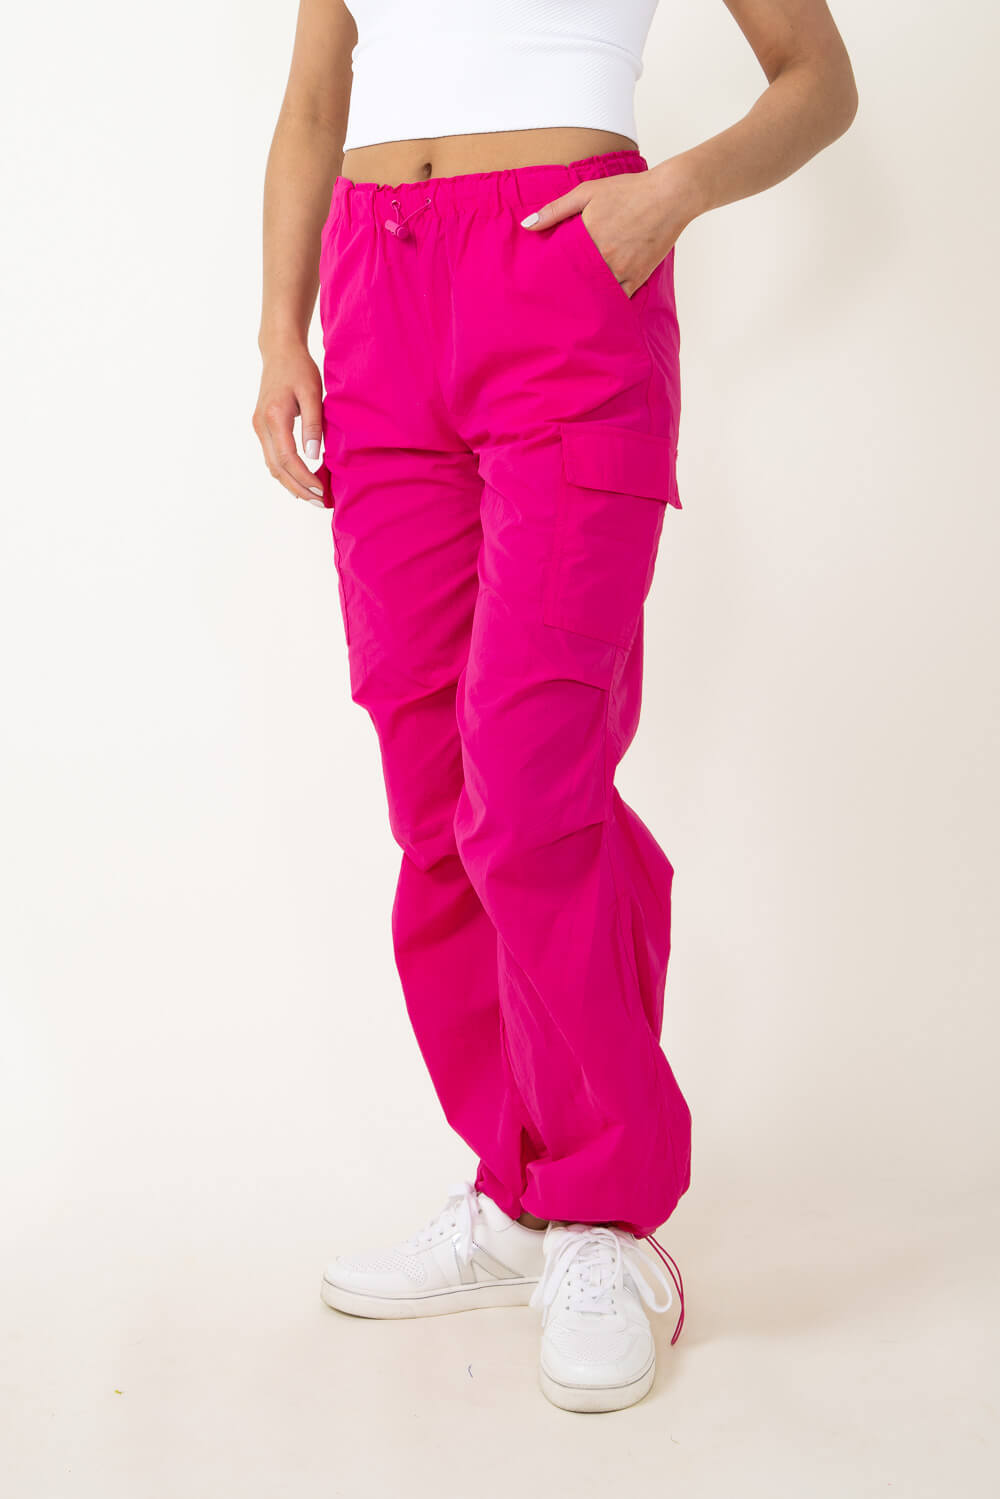 Blush Pink Blazer | Blush outfit, Blush dress outfit, Dress pants outfits